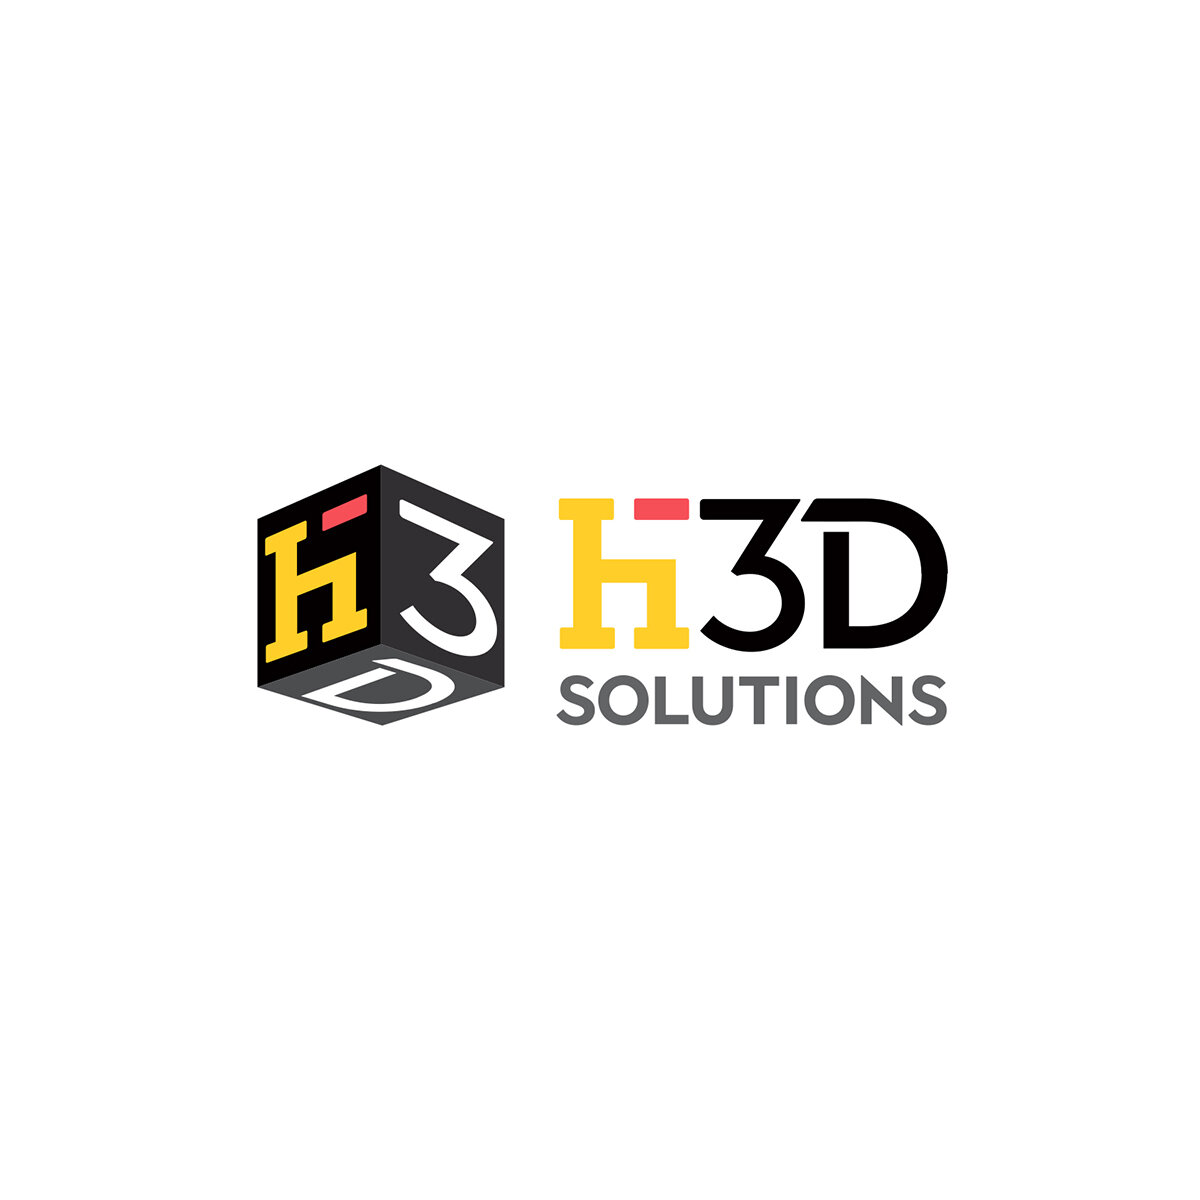 H3D logo.jpg